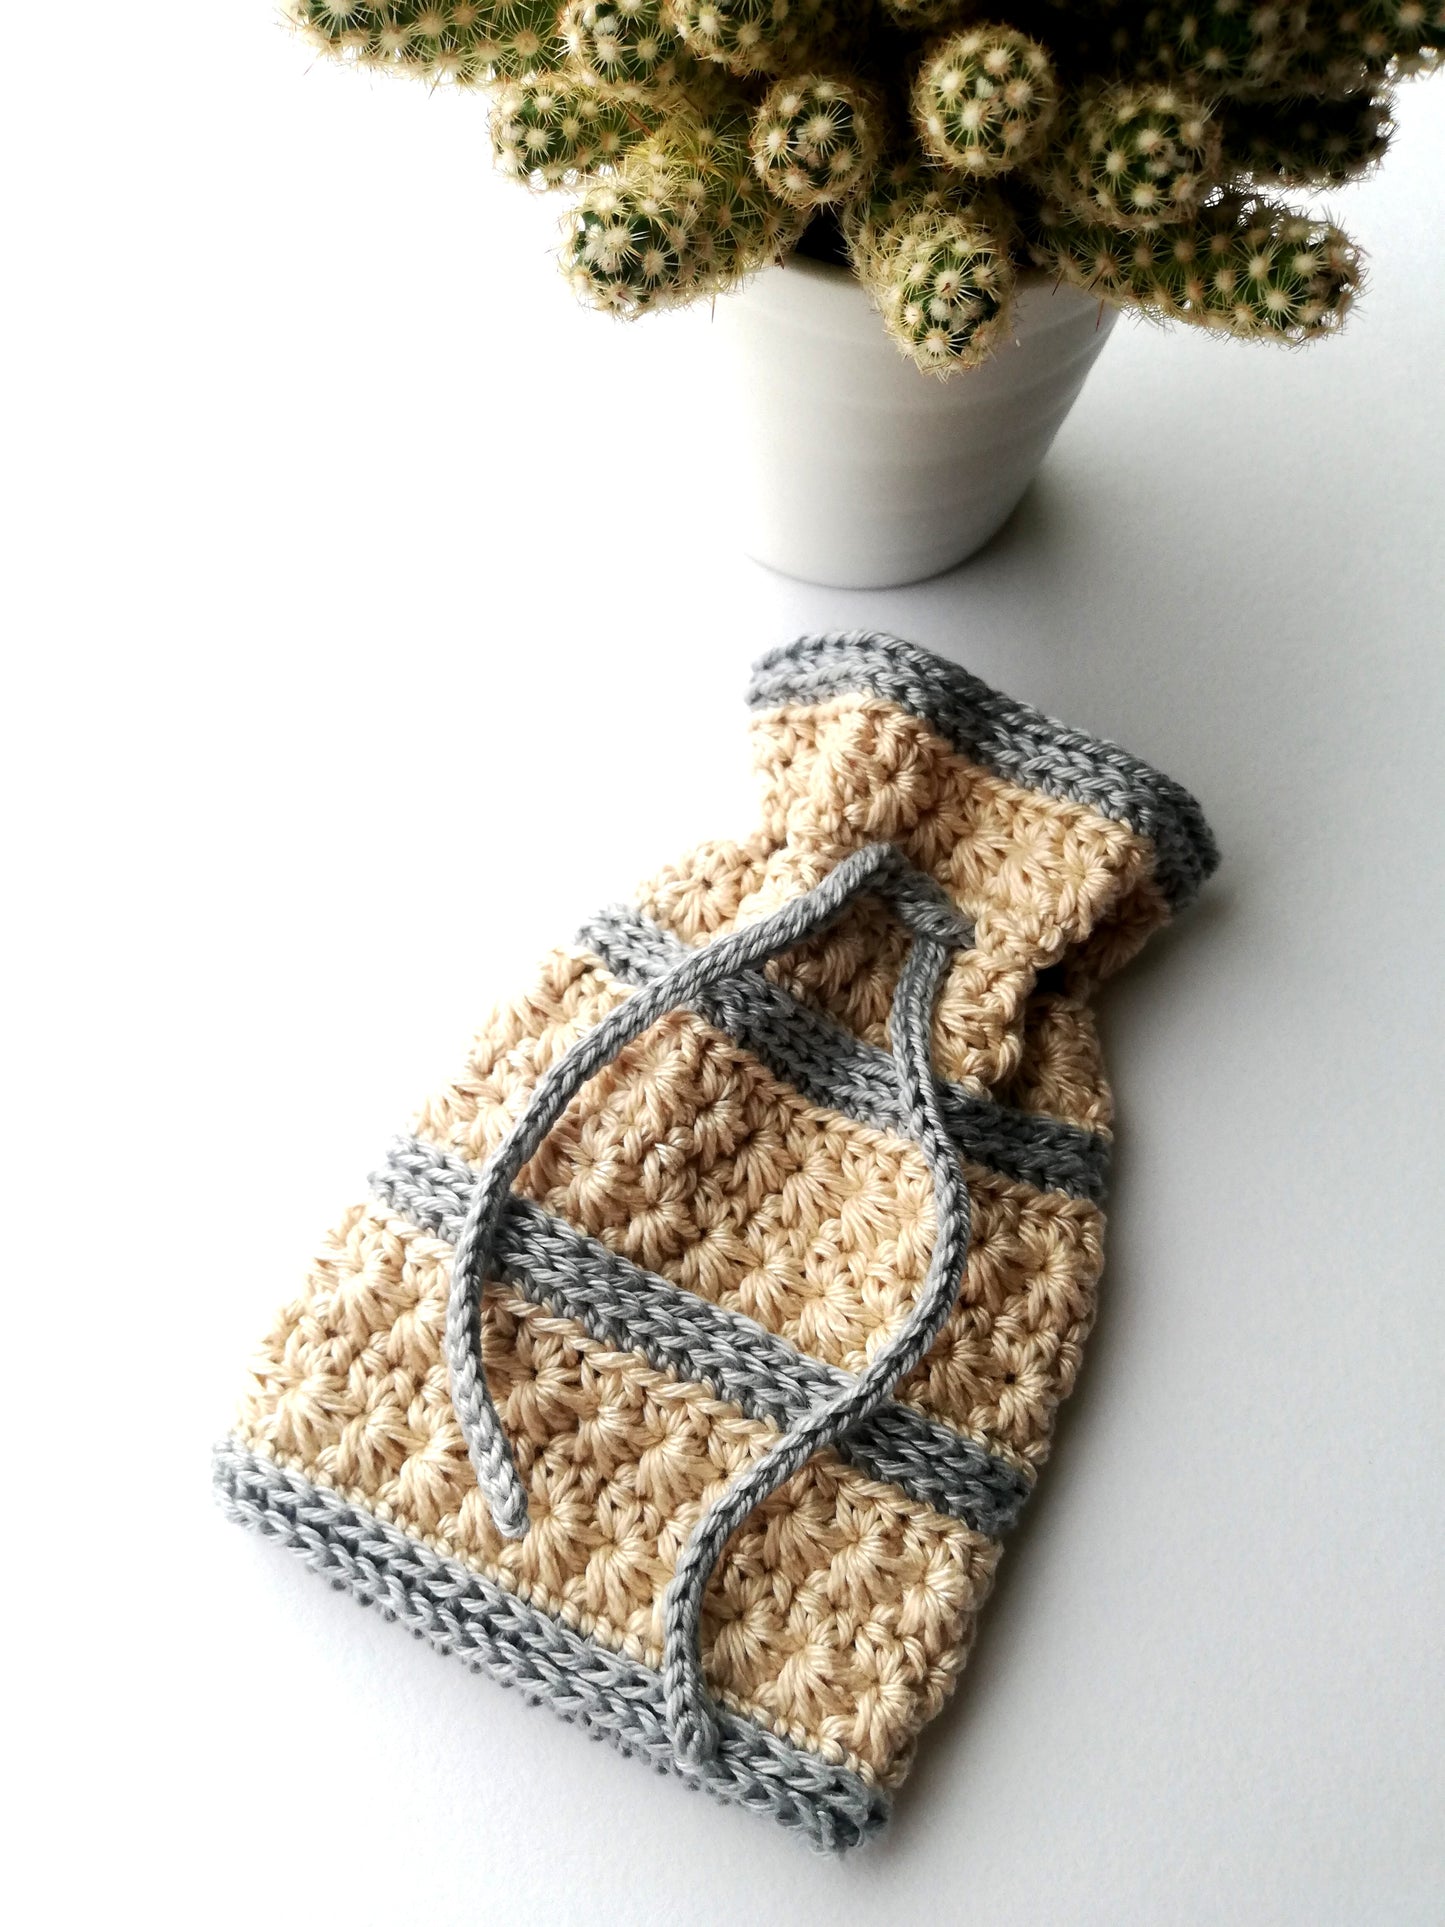 Crochet pattern: small star stitch bag